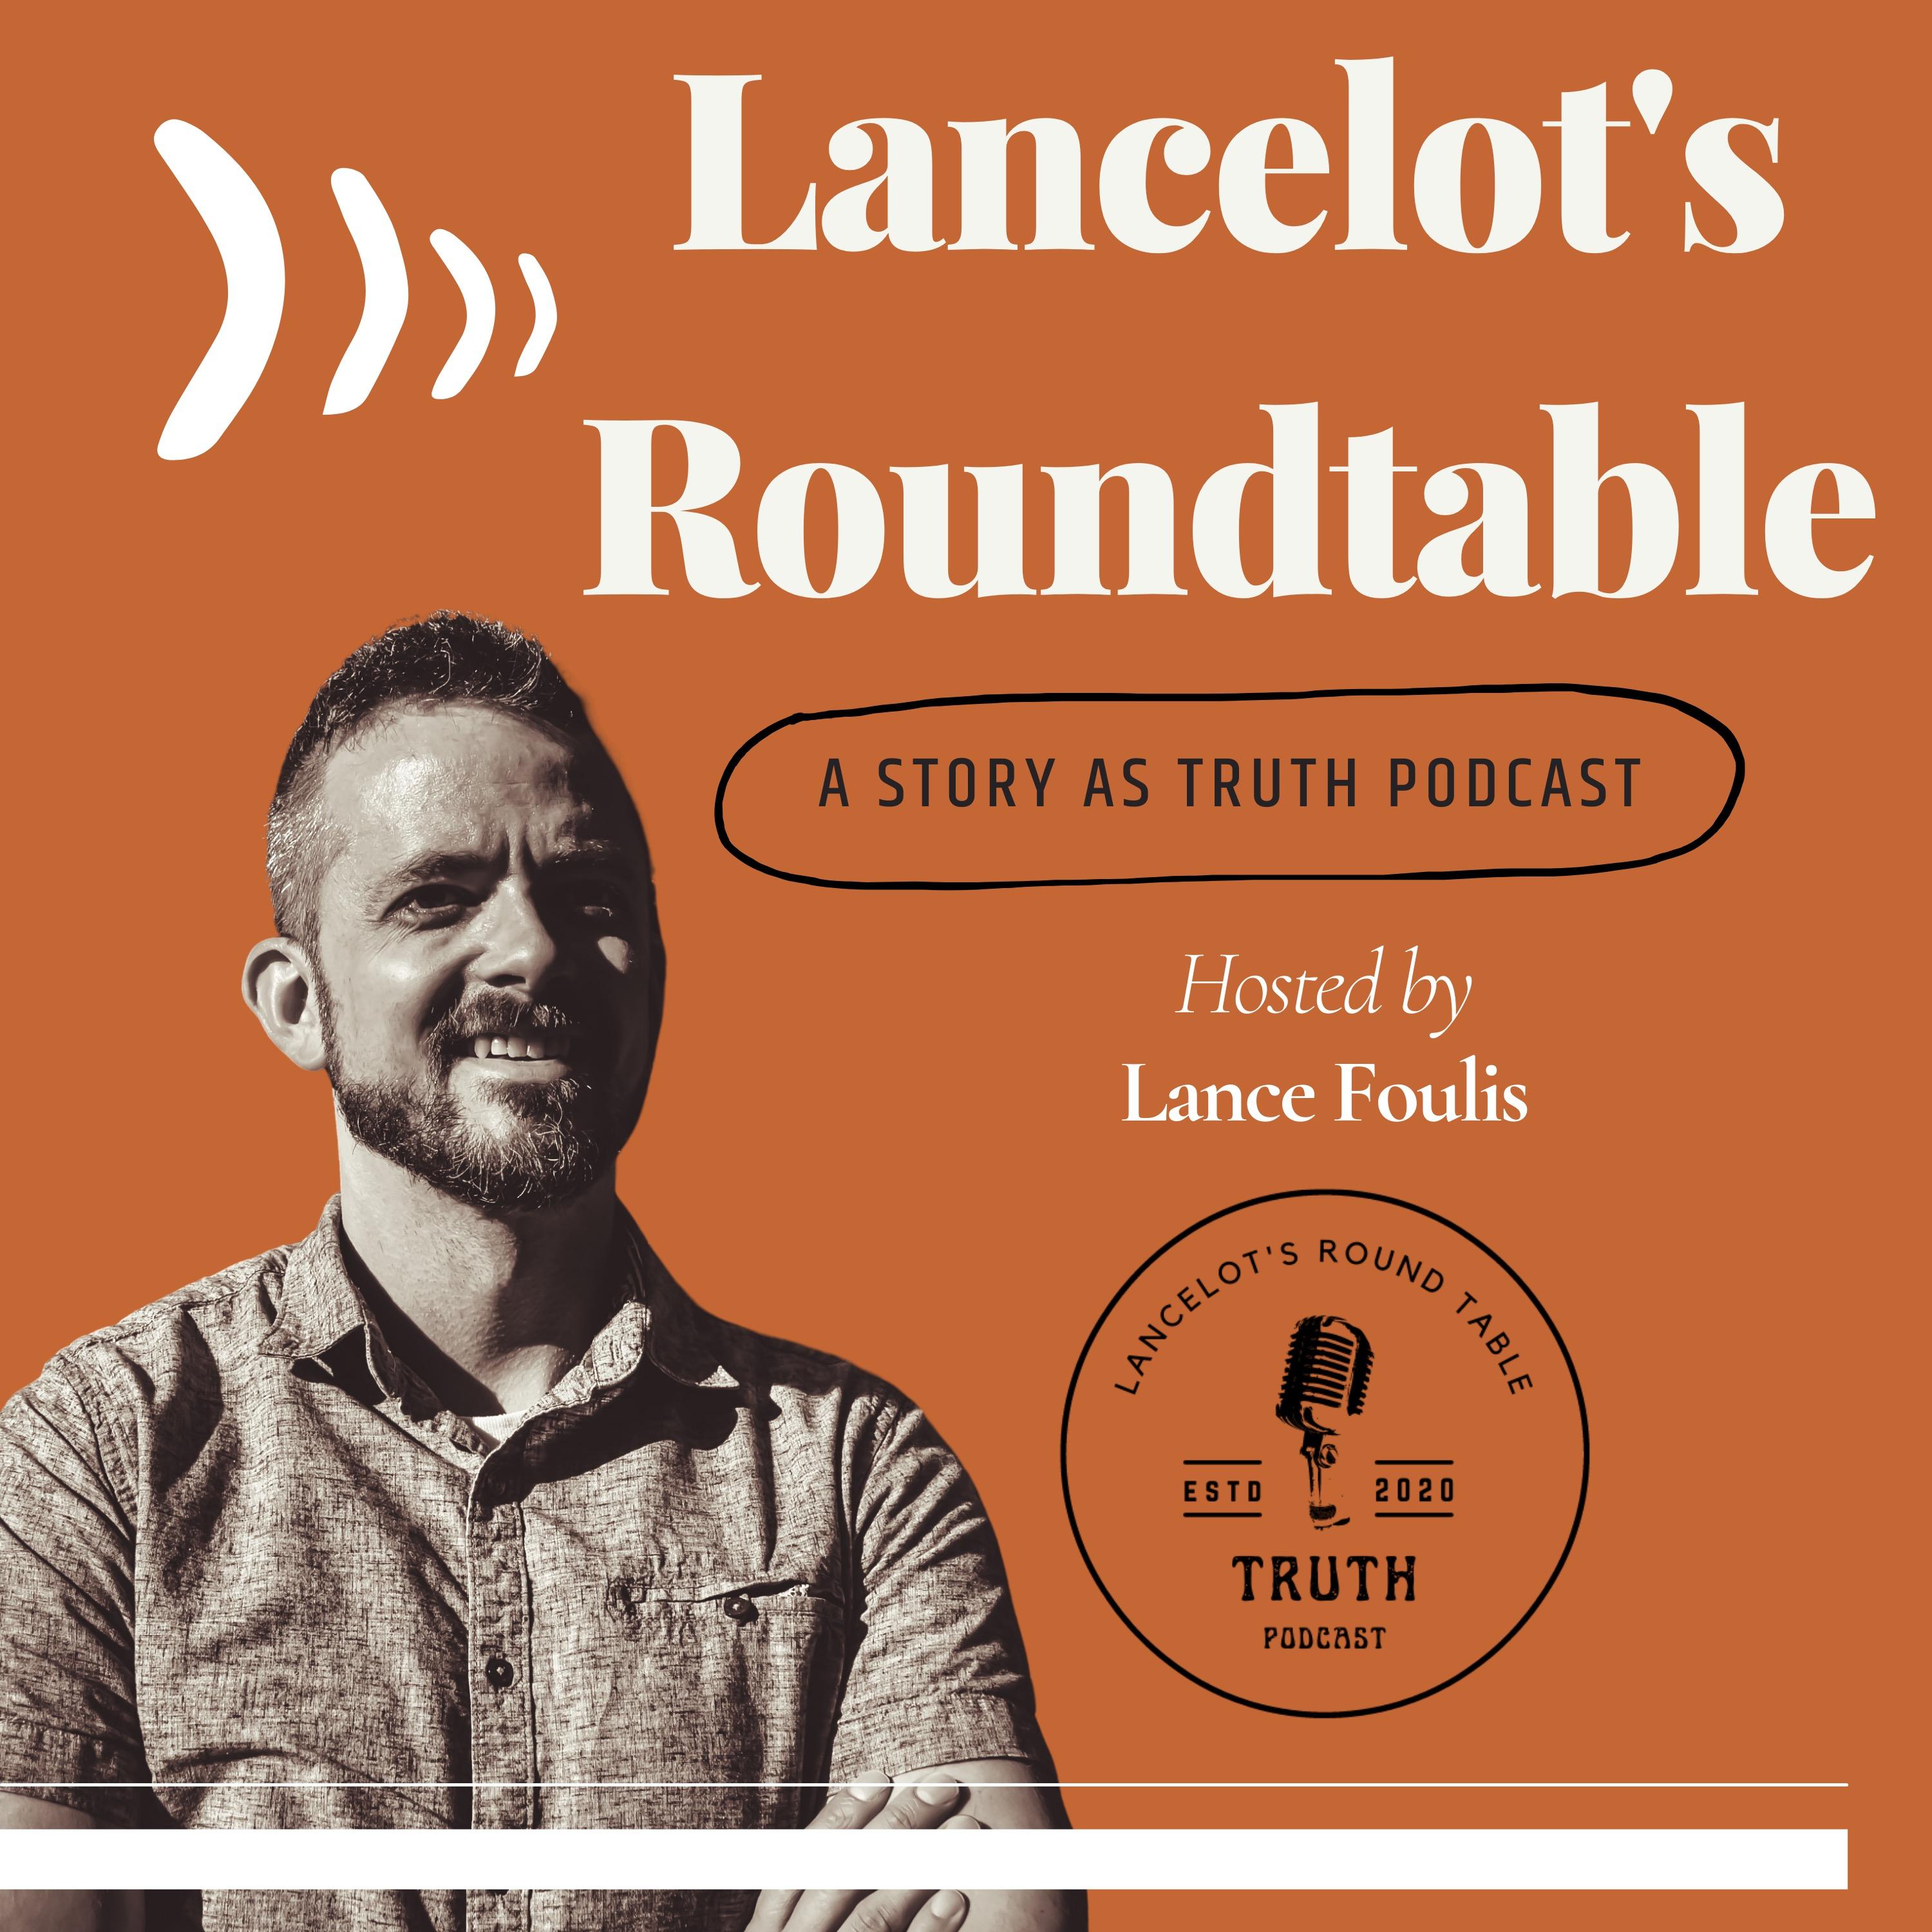 Lancelot's Roundtable